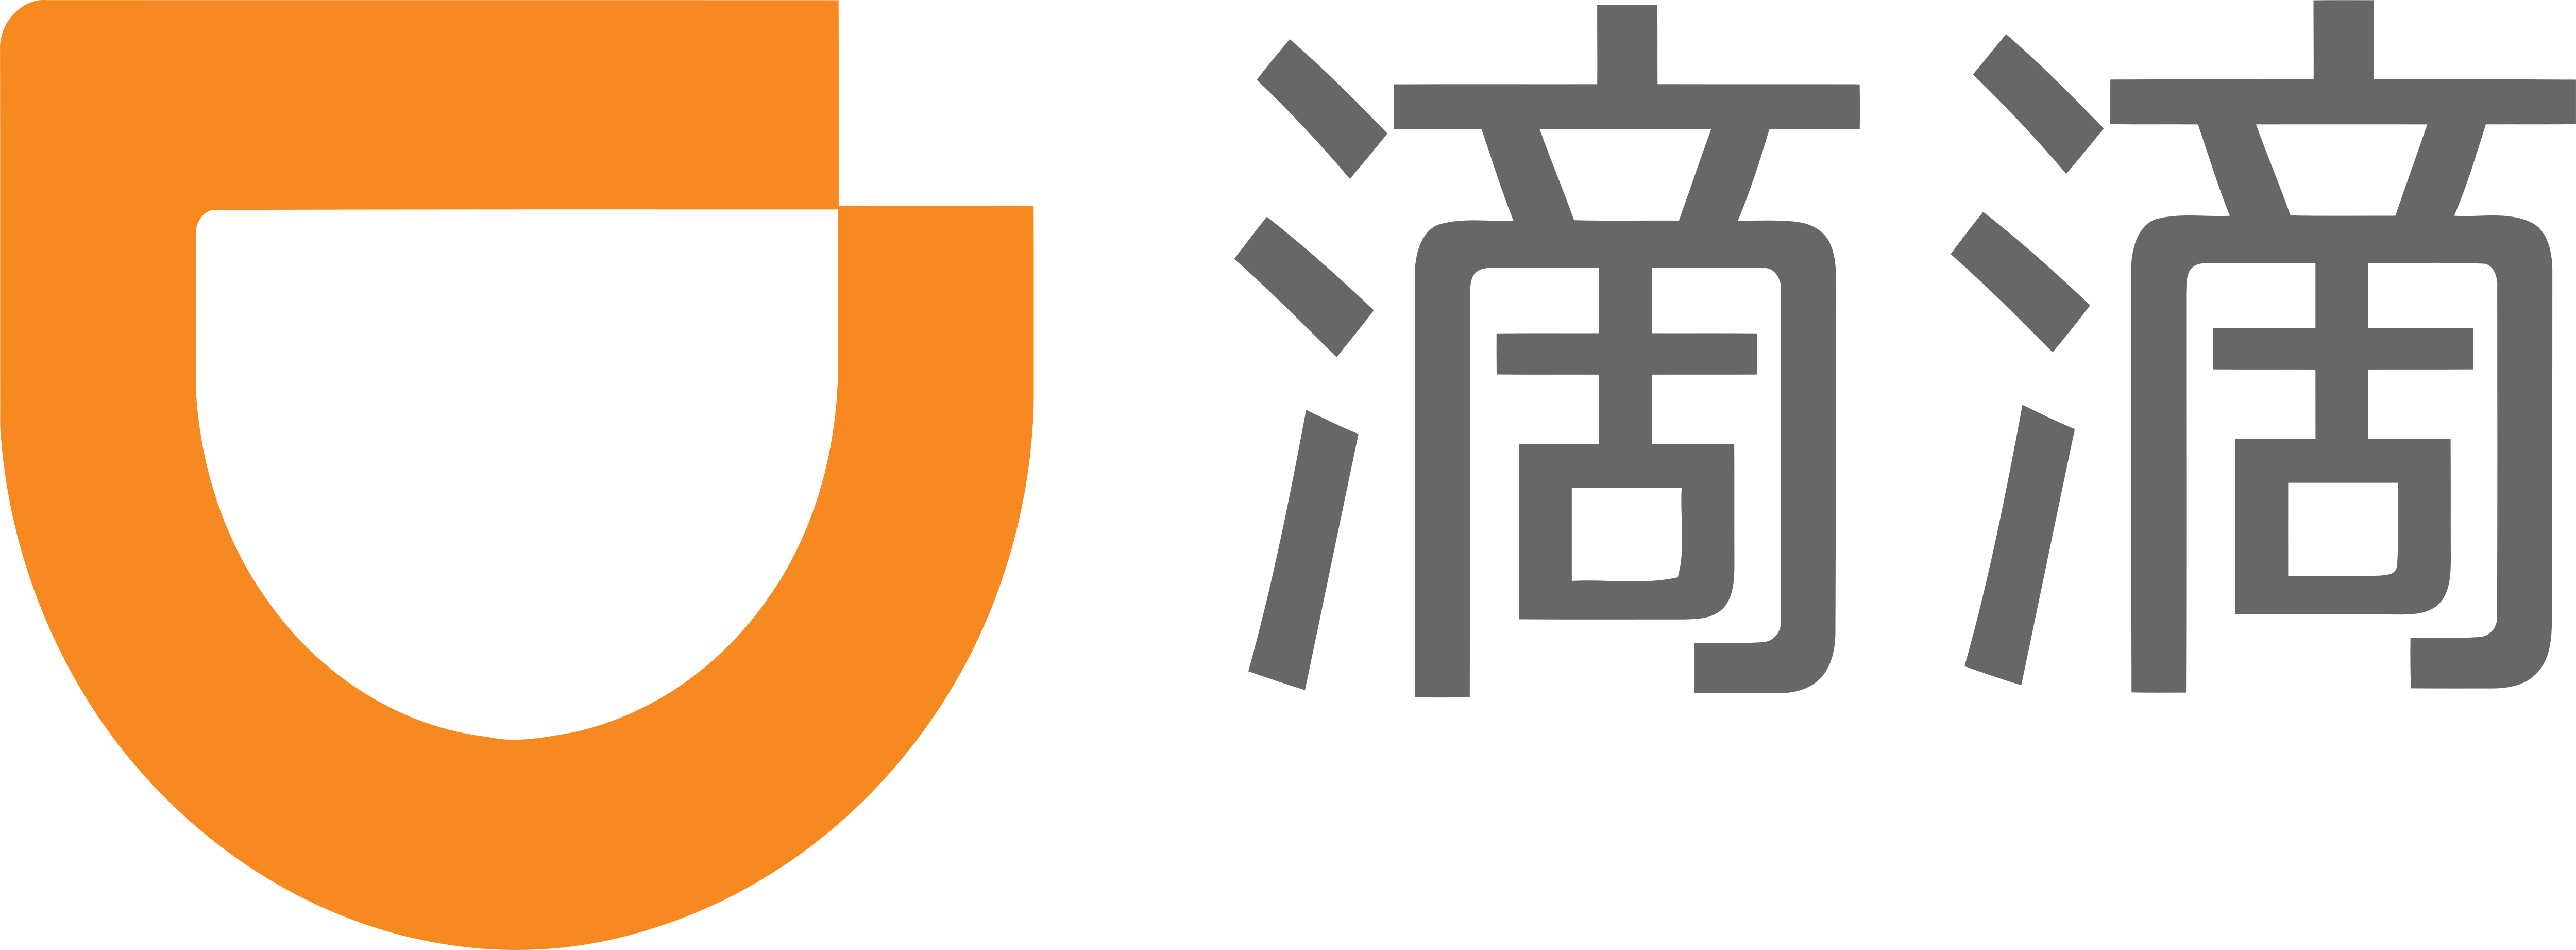 File:Logo didi auf vollen touren.svg - Wikimedia Commons